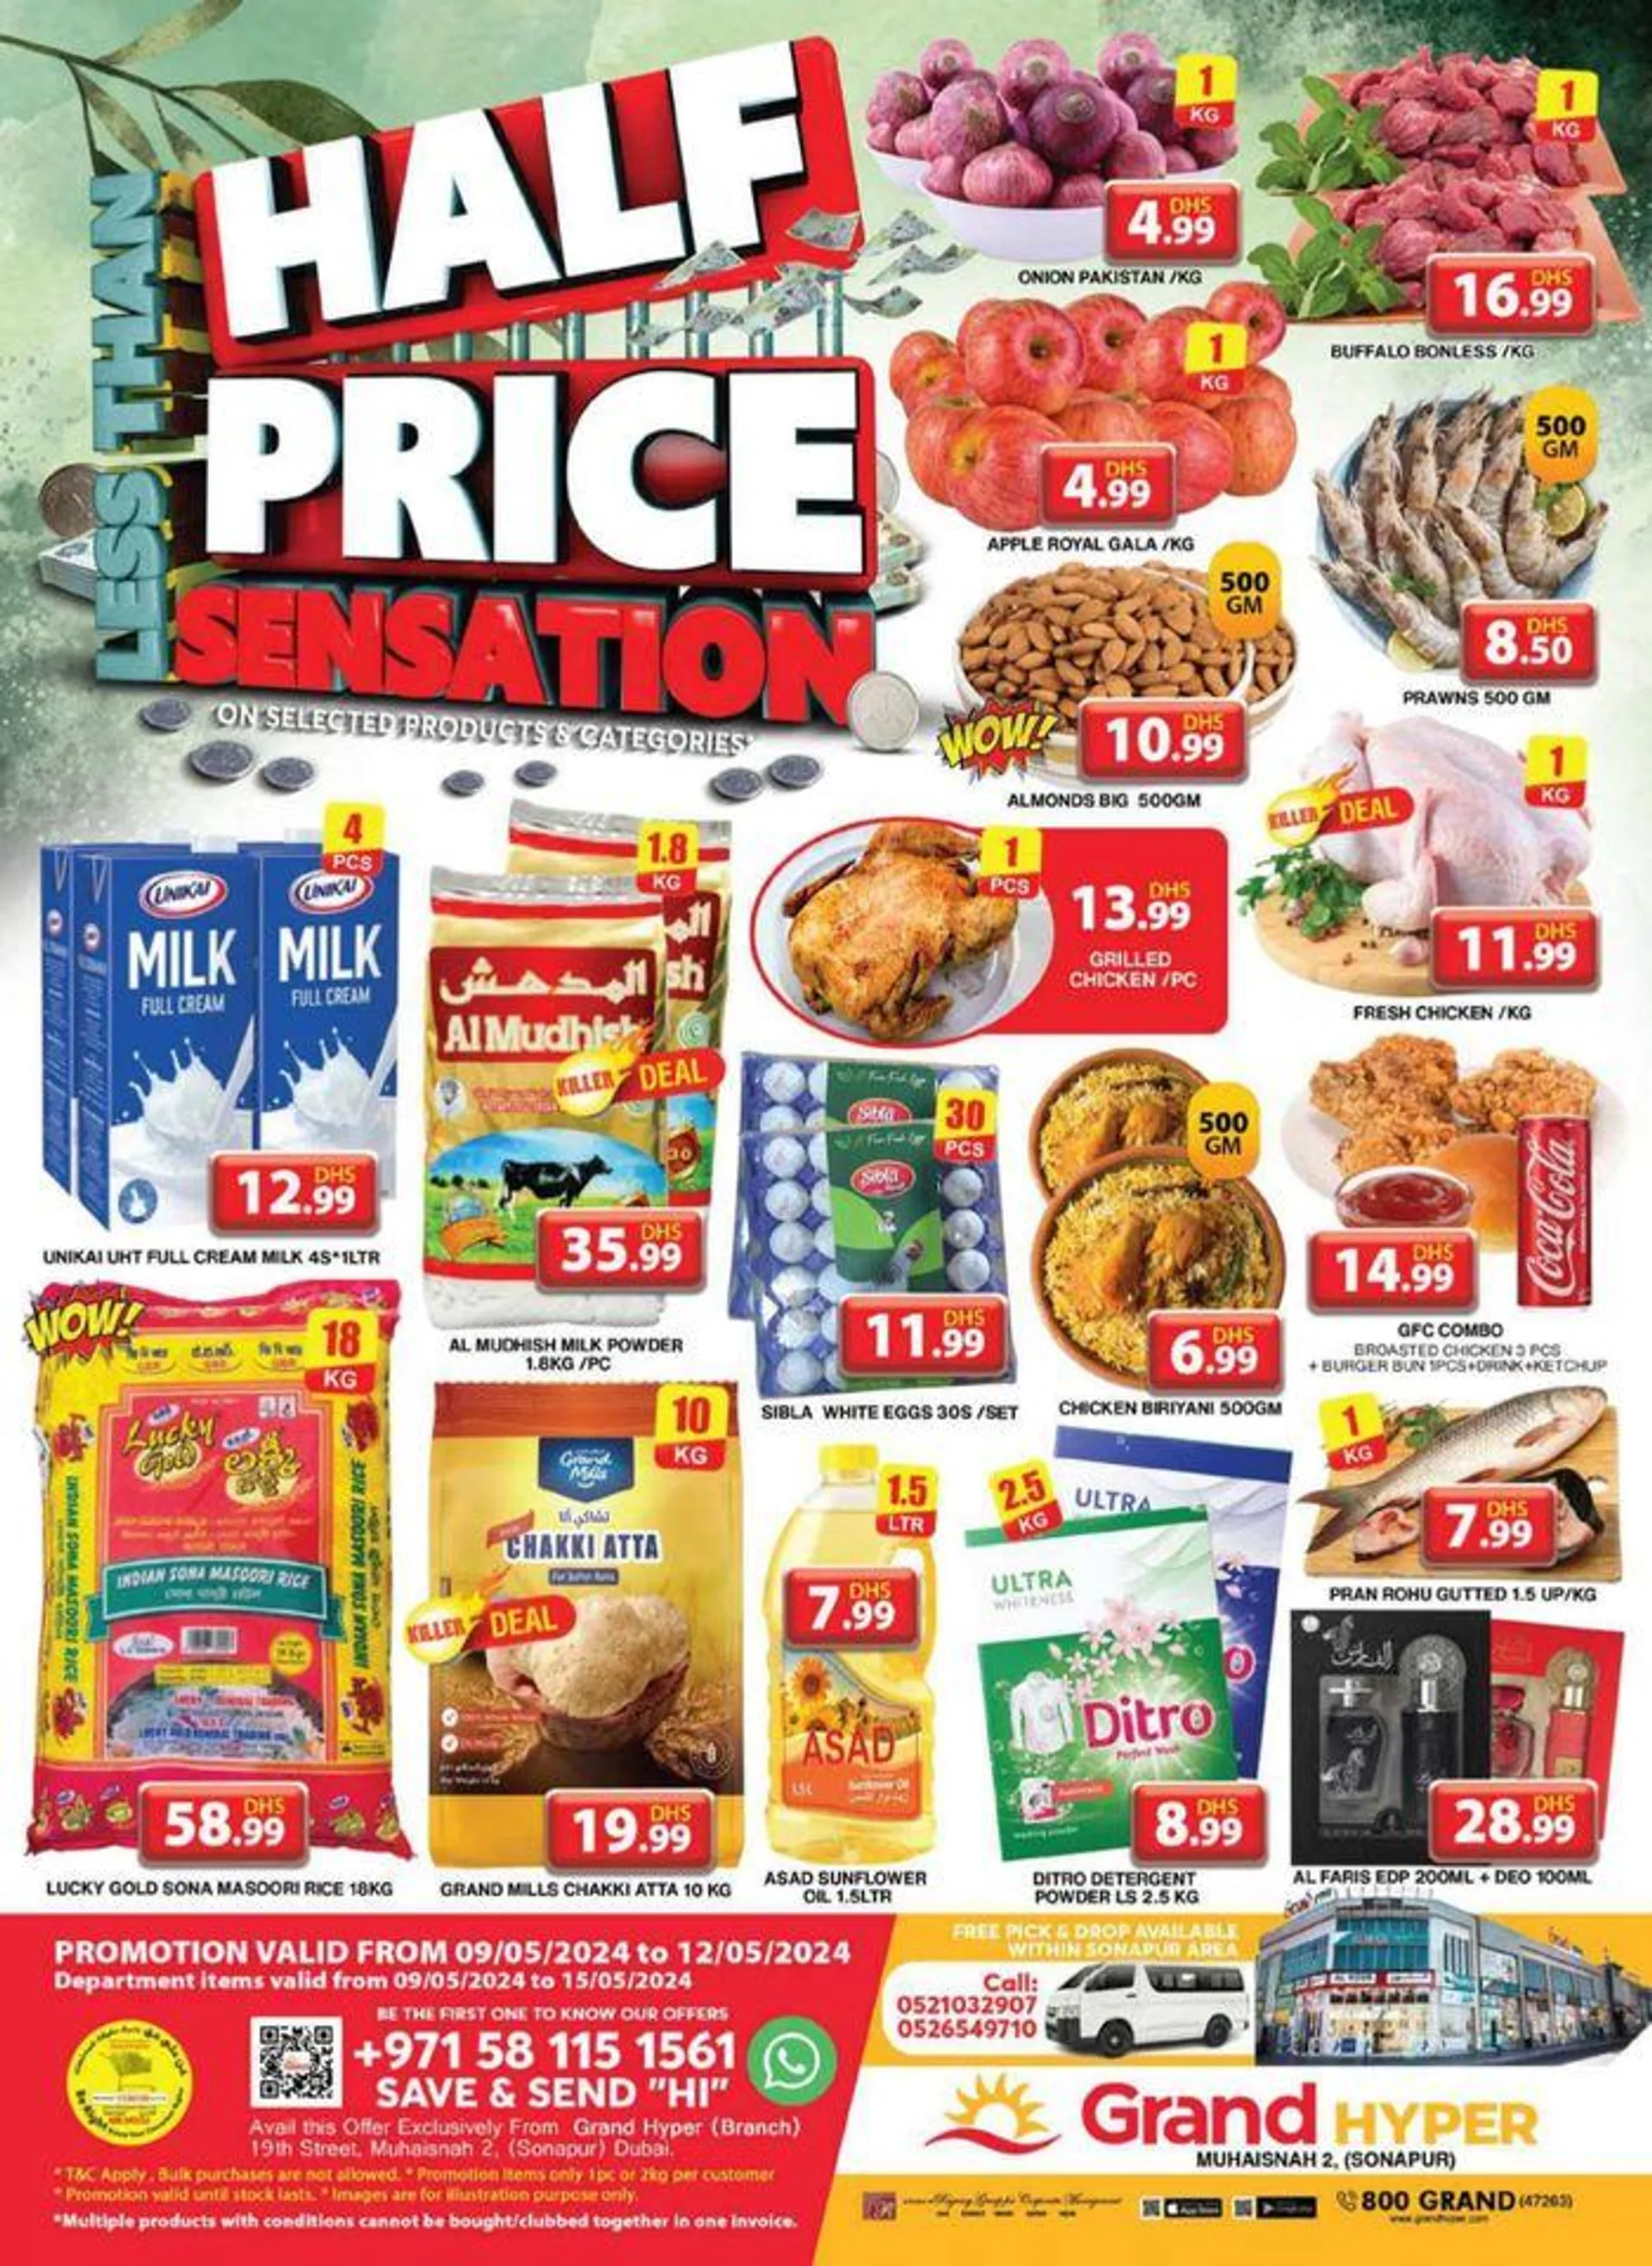 Half Price Sensation! Muhaisnah - 1